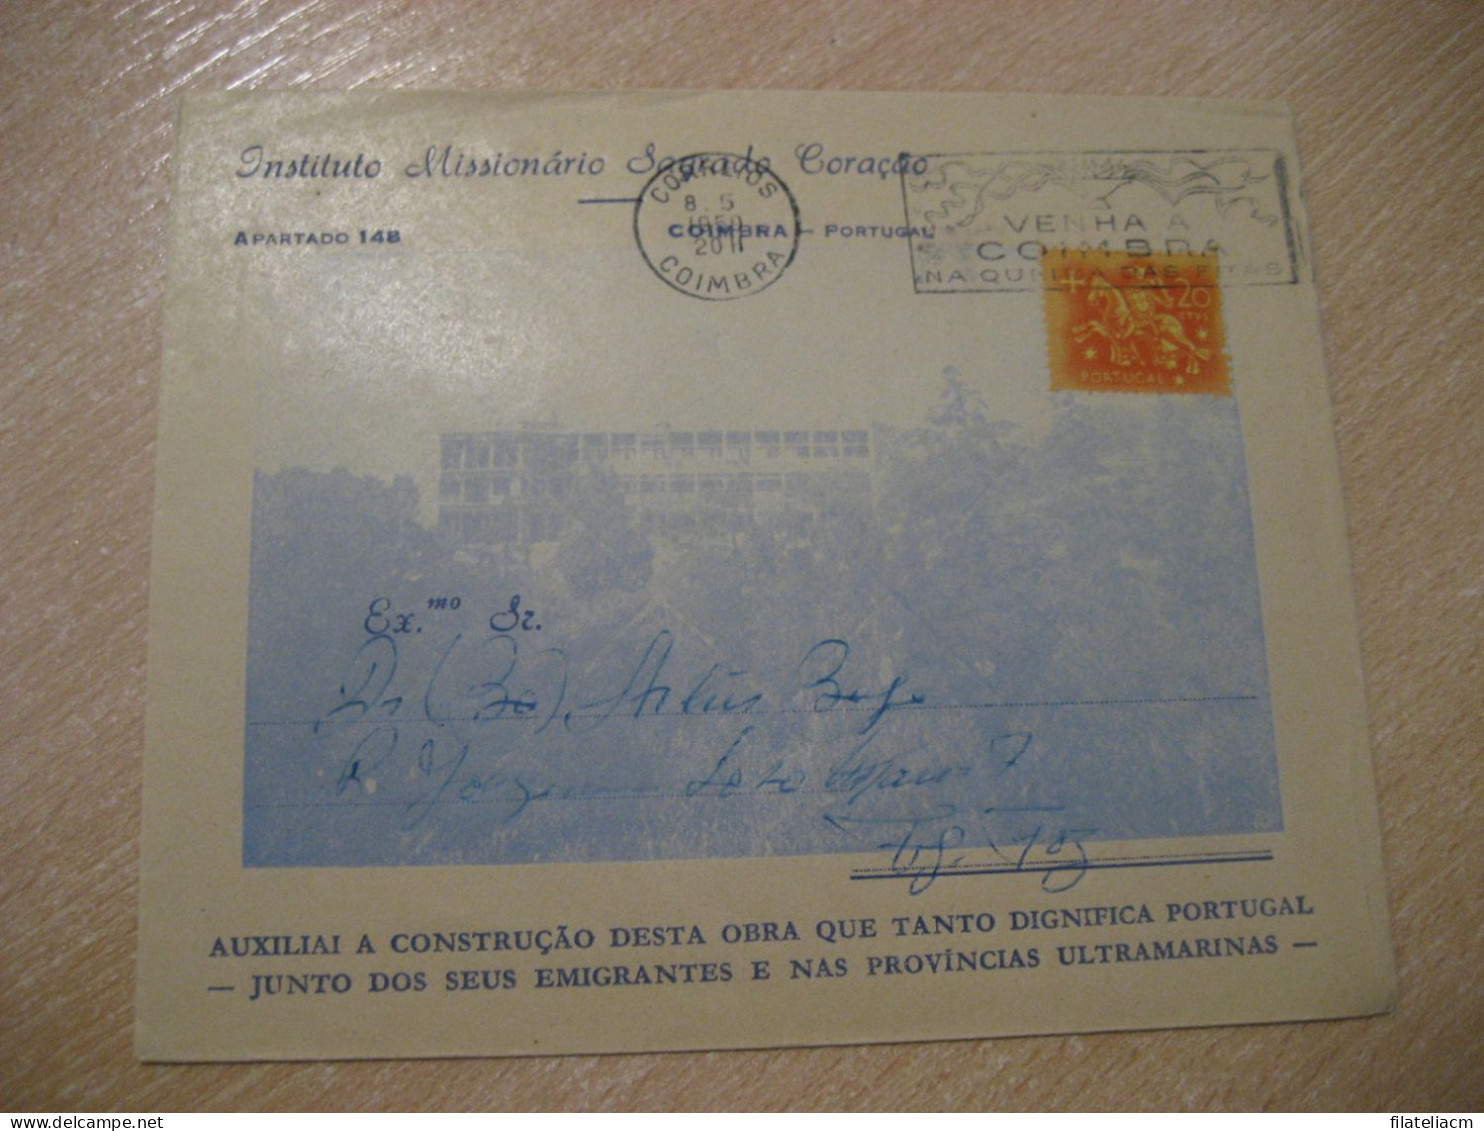 COIMBRA 1959 To Figueira Da Foz Cancel Instituto Missionario Sagrado Coraçao Cover PORTUGAL - Storia Postale